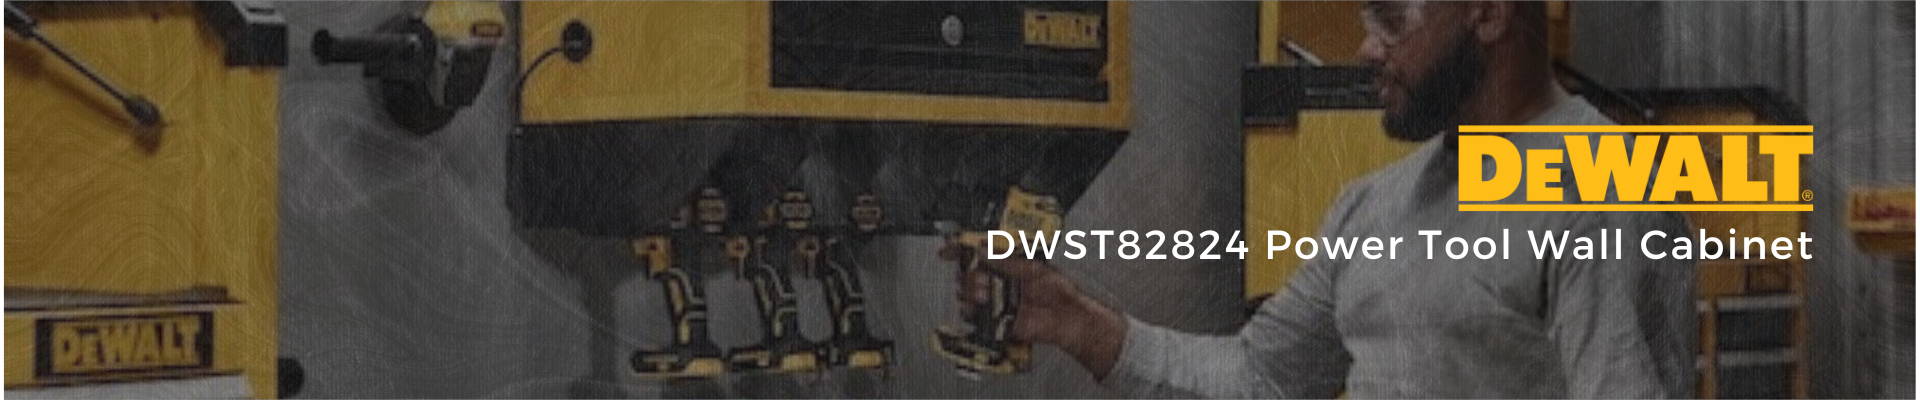 Dewalt DWST82824 Power Tool Wall Cabinet: The Ultimate Workshop Storage Solution